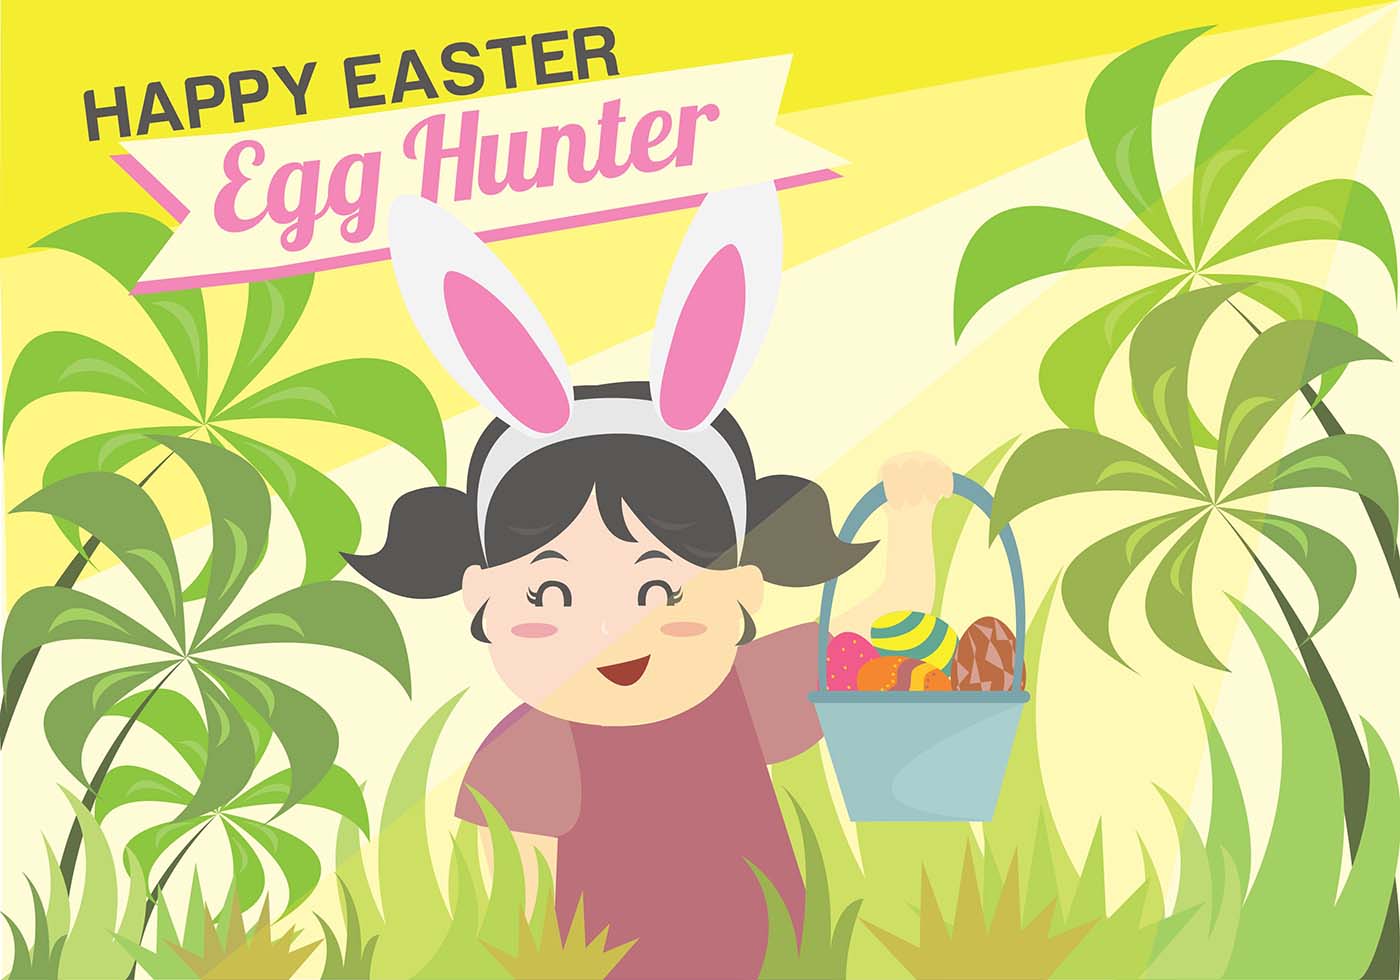 Download Easter Egg Hunt Kids Background Vector 145453 - Download Free Vectors, Clipart Graphics & Vector Art